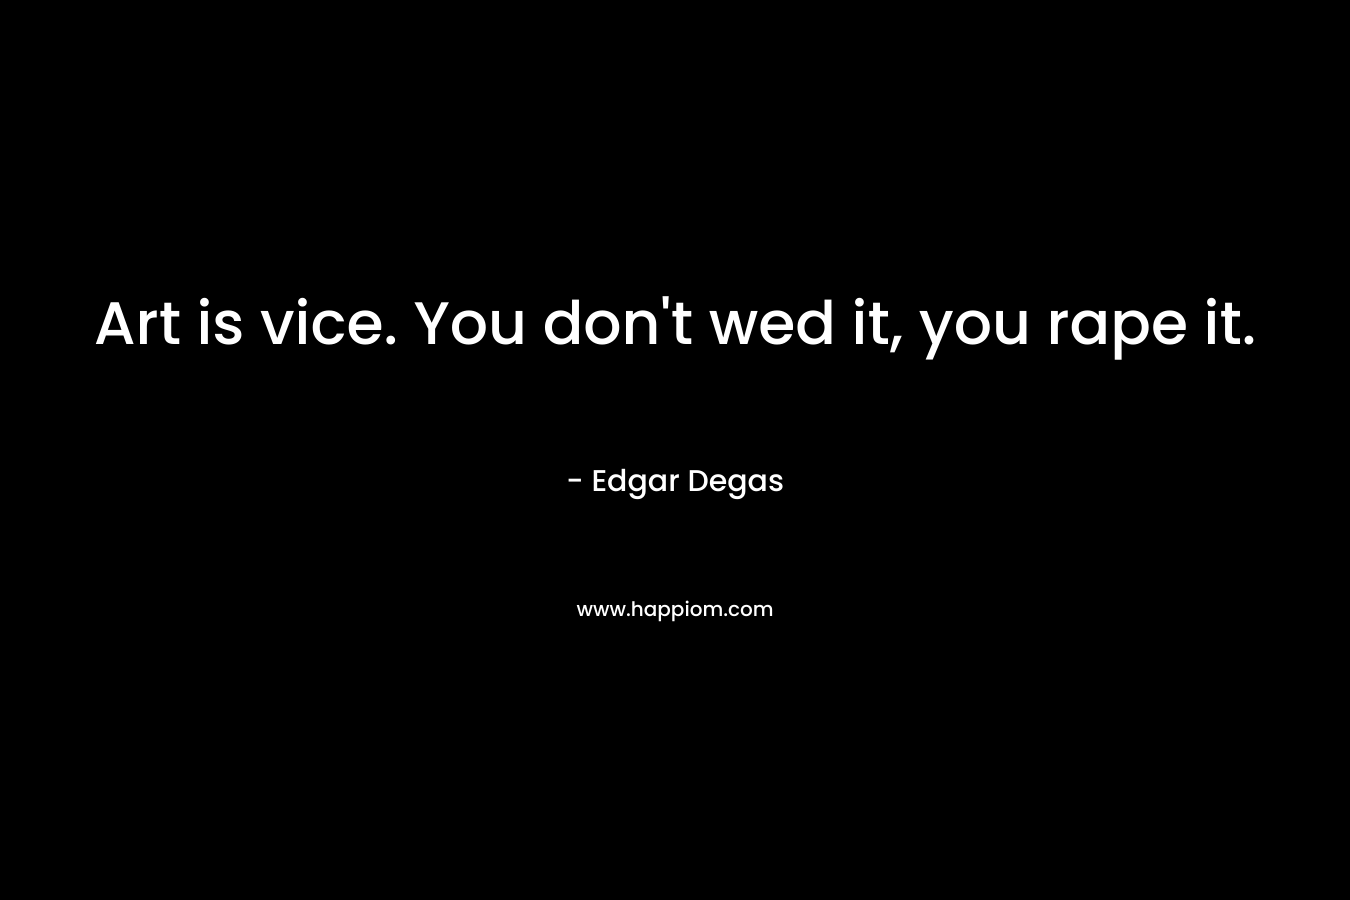 Art is vice. You don't wed it, you rape it.